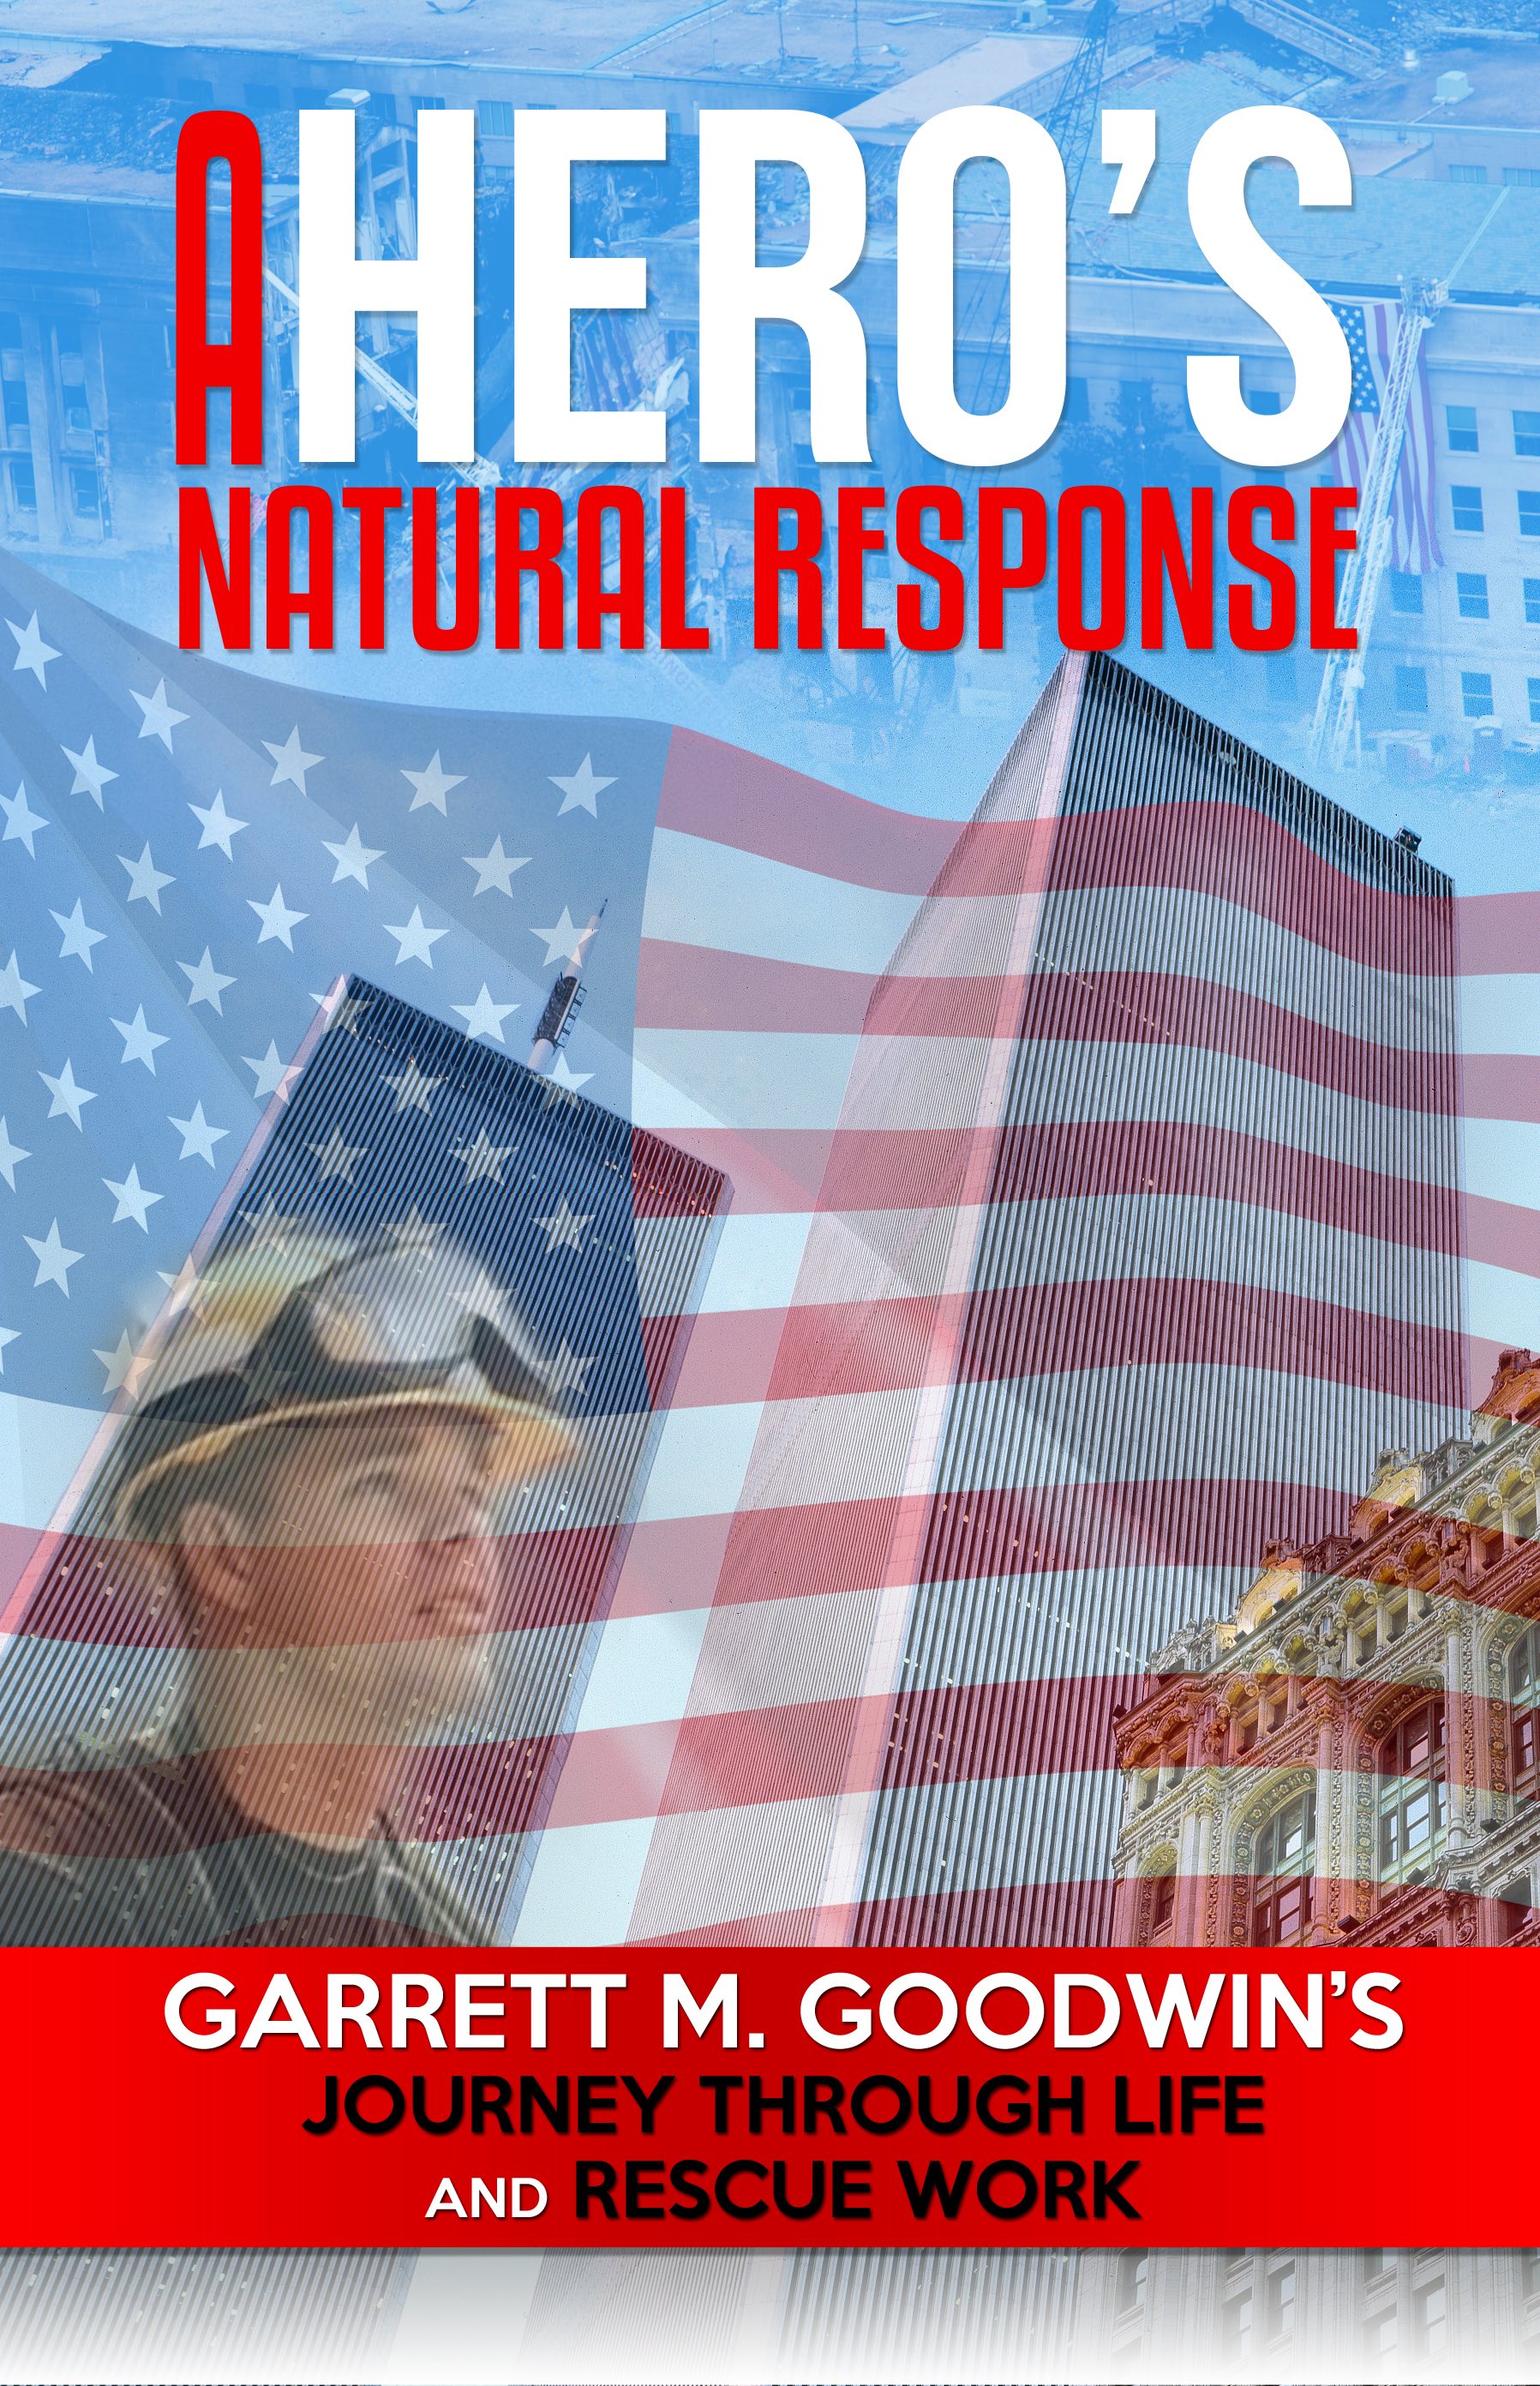 "A Hero’s Natural Response: Garrett M. Goodwin’s Journey Through Life & Rescue Work"